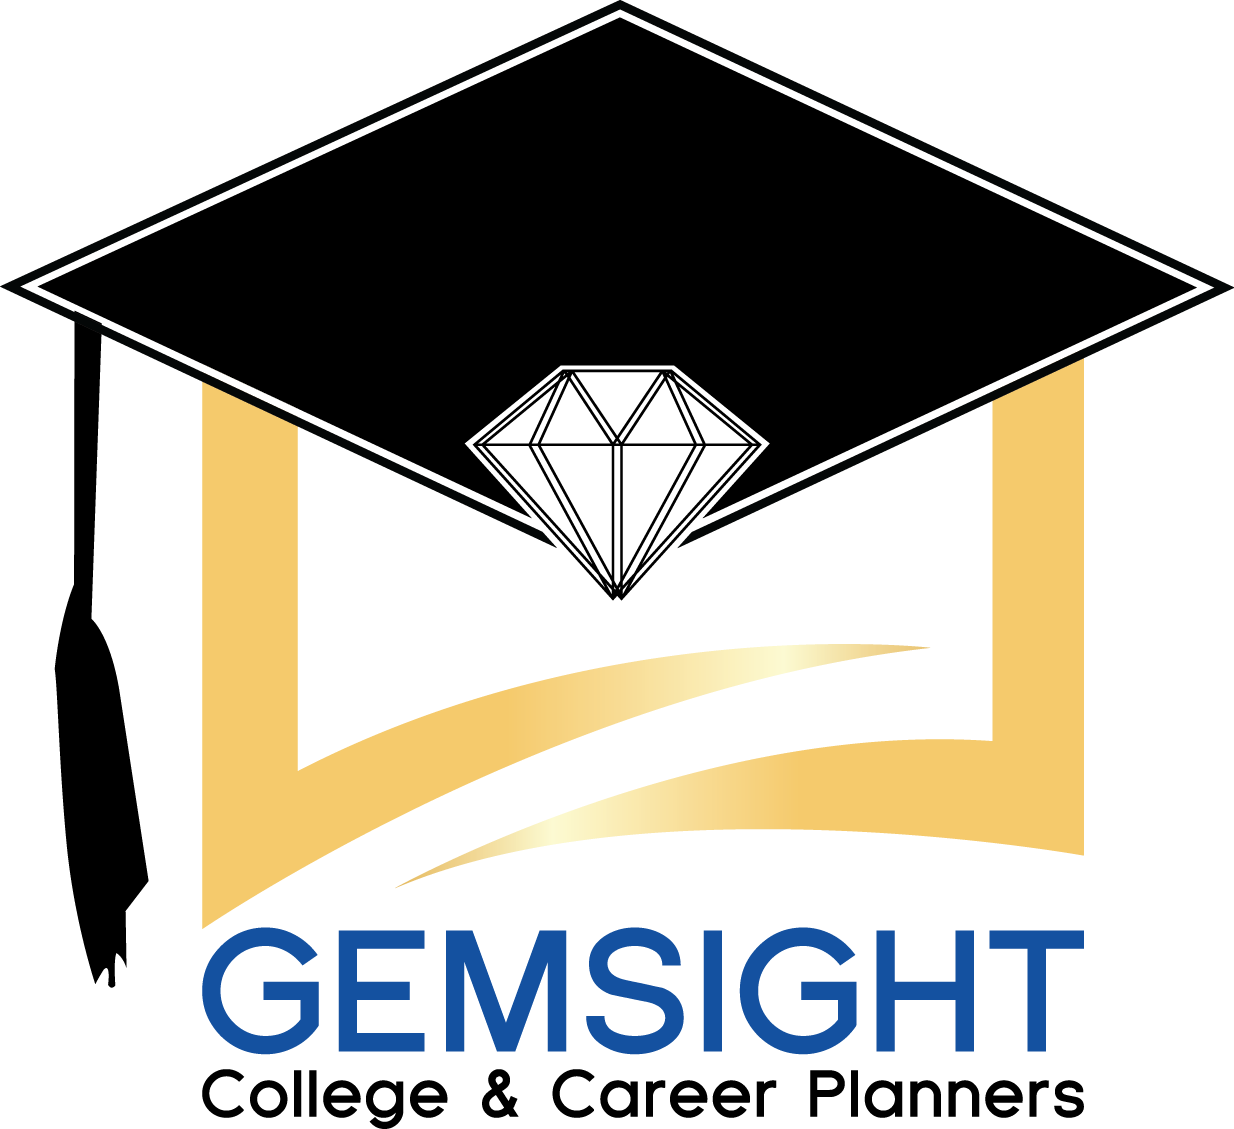 Gemsight